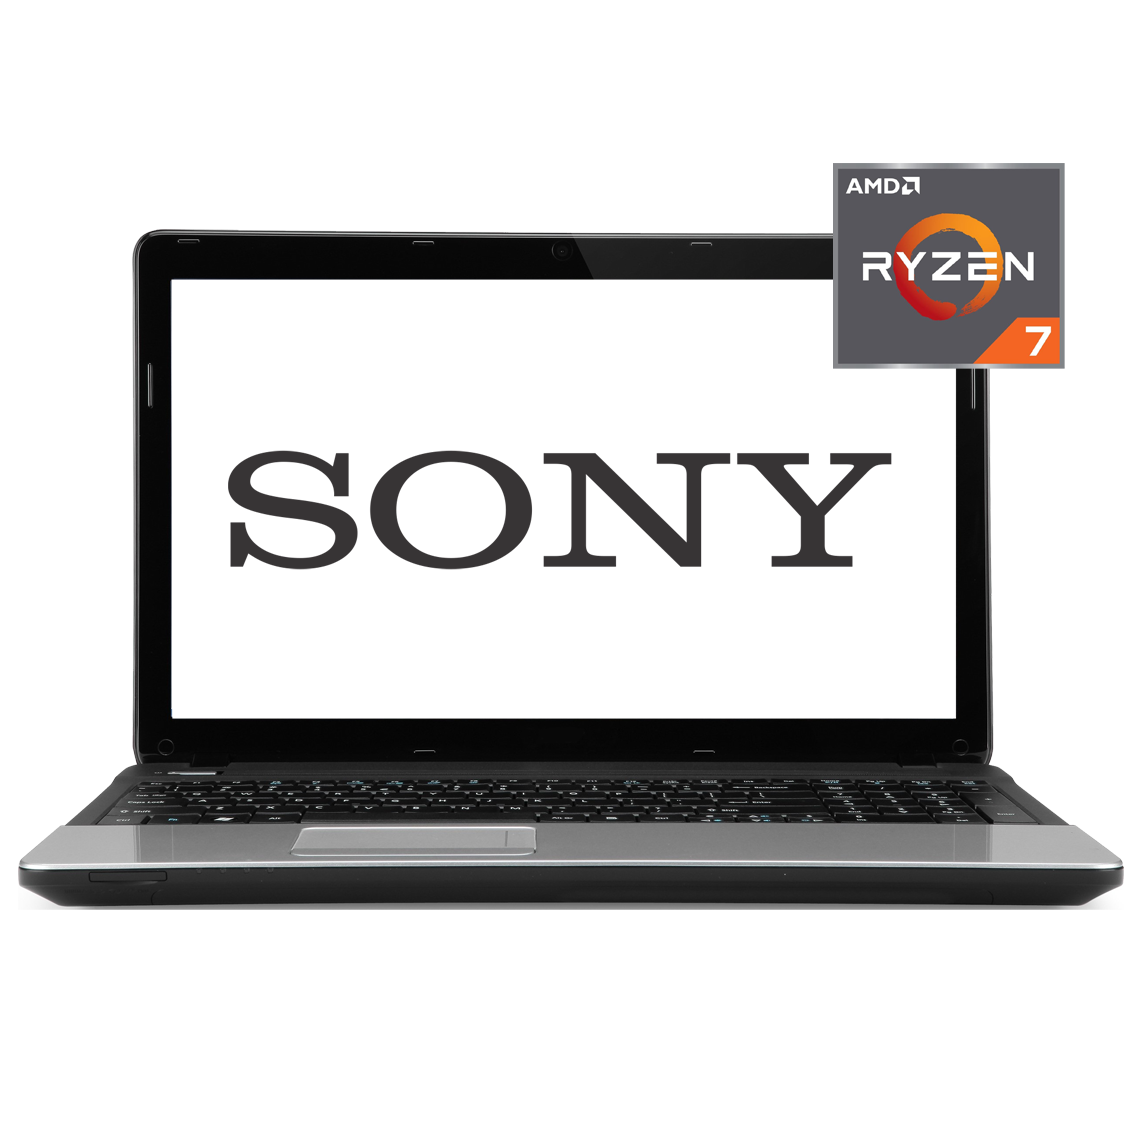 Sony - 15 inch AMD Ryzen 7